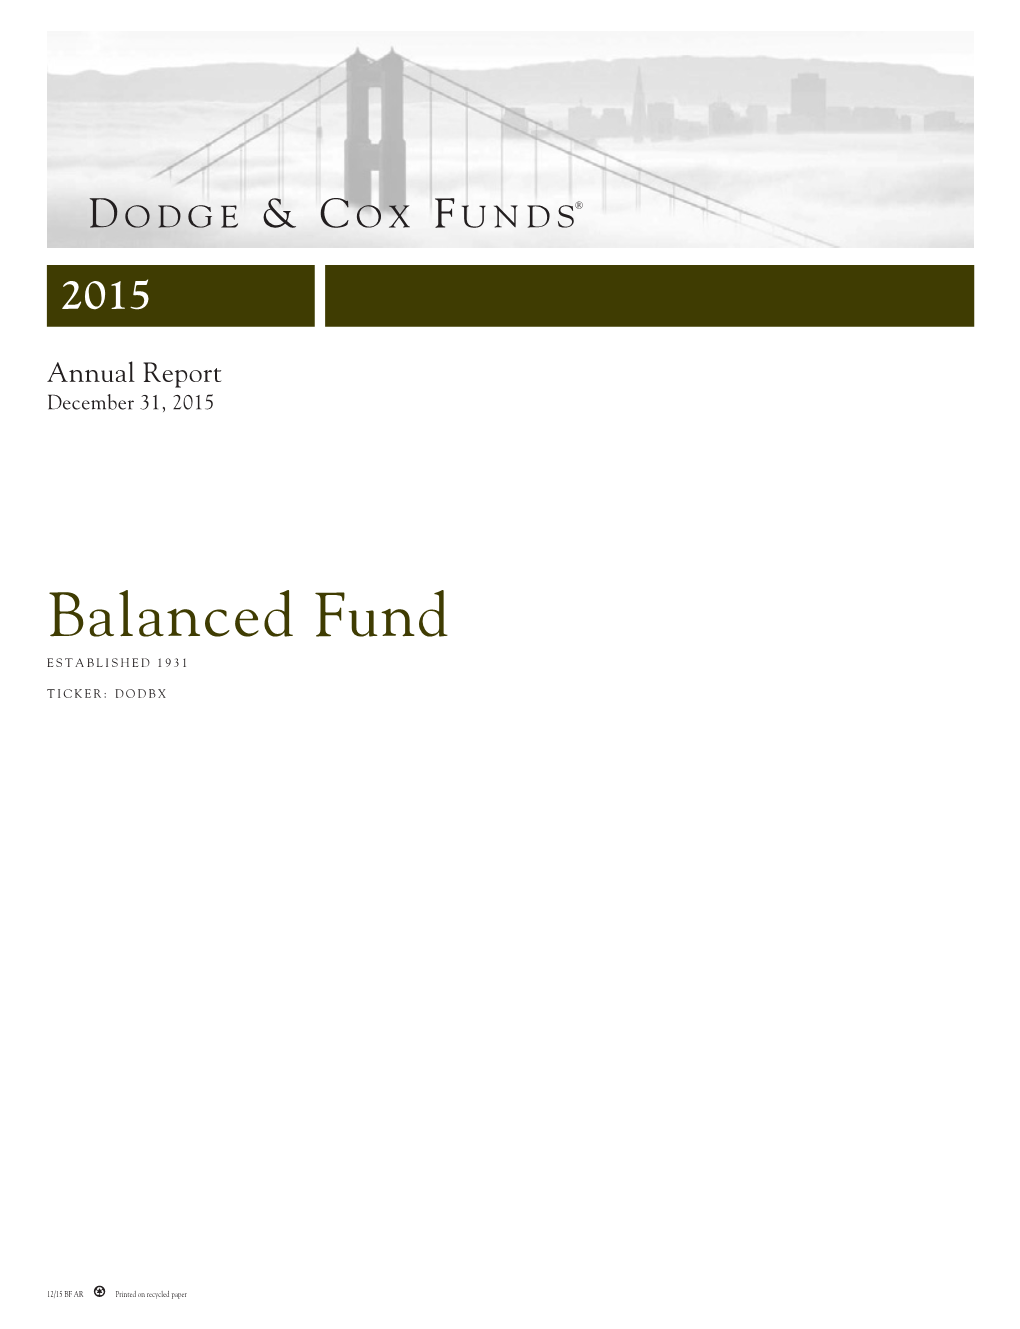 Balanced Fund ESTABLISHED 1931